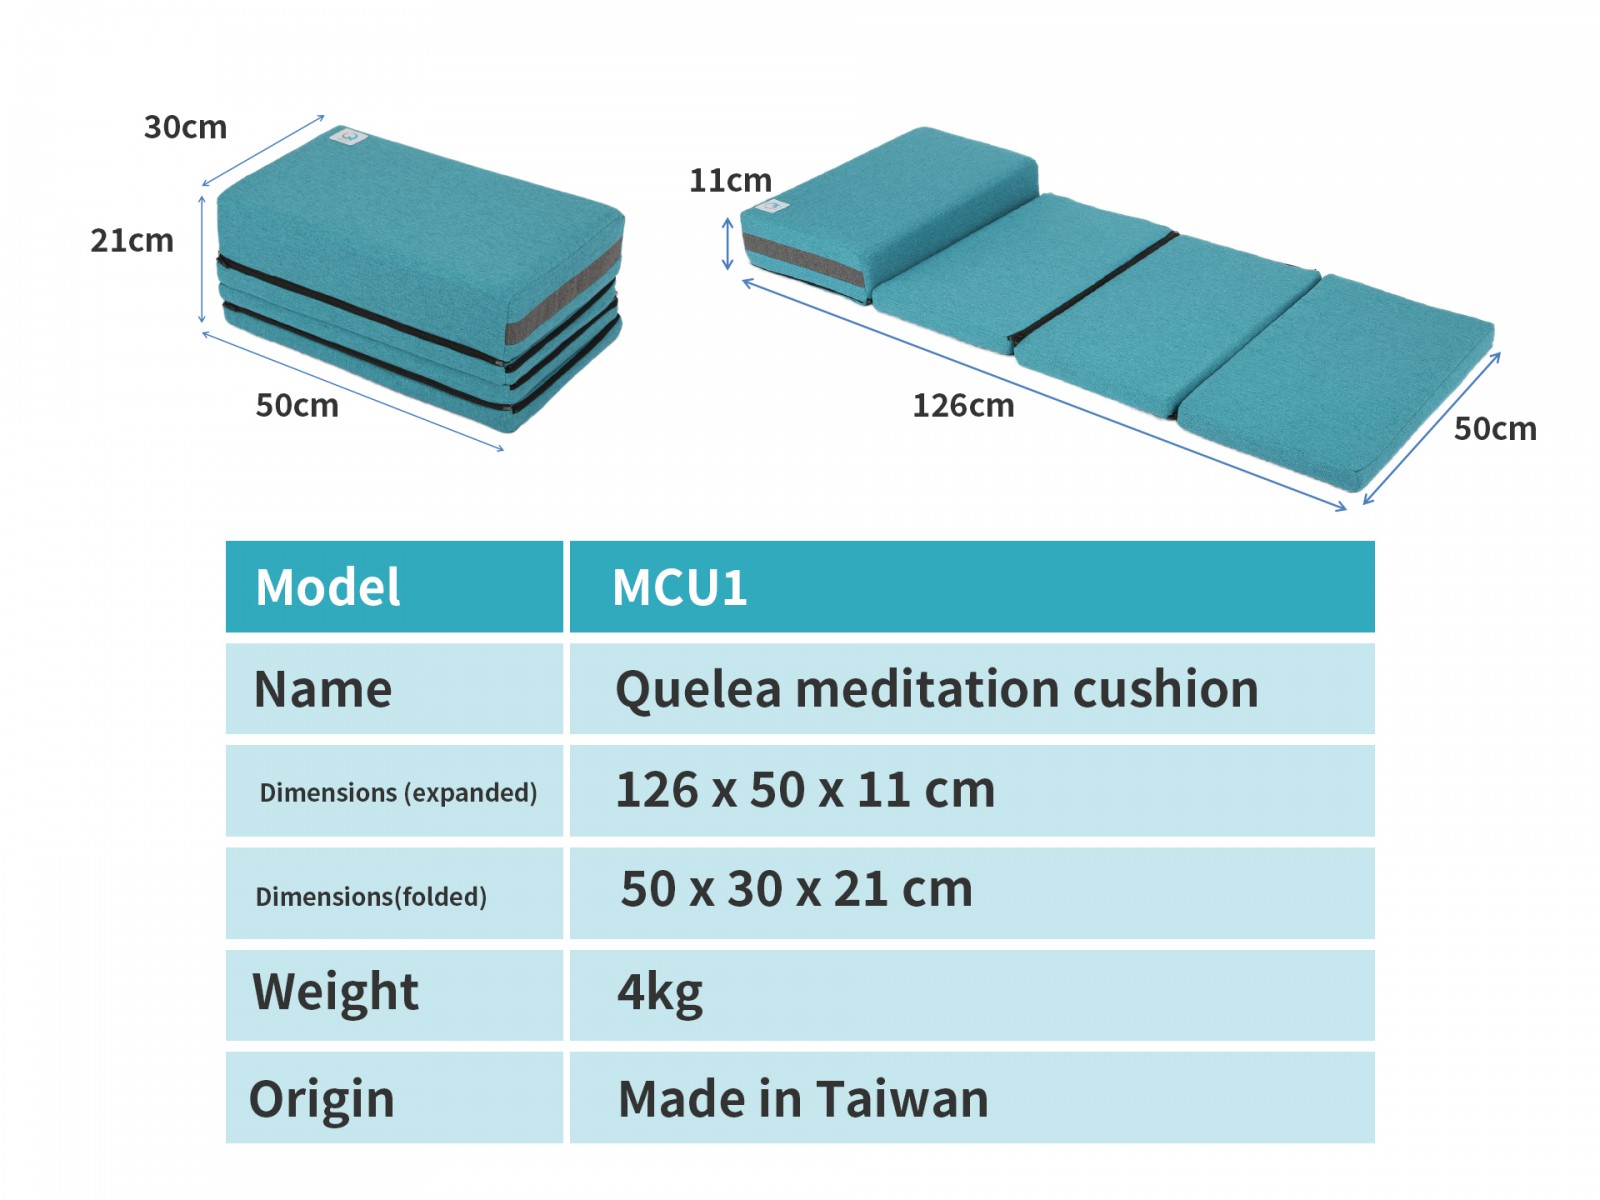 Quelea meditation cushion specification